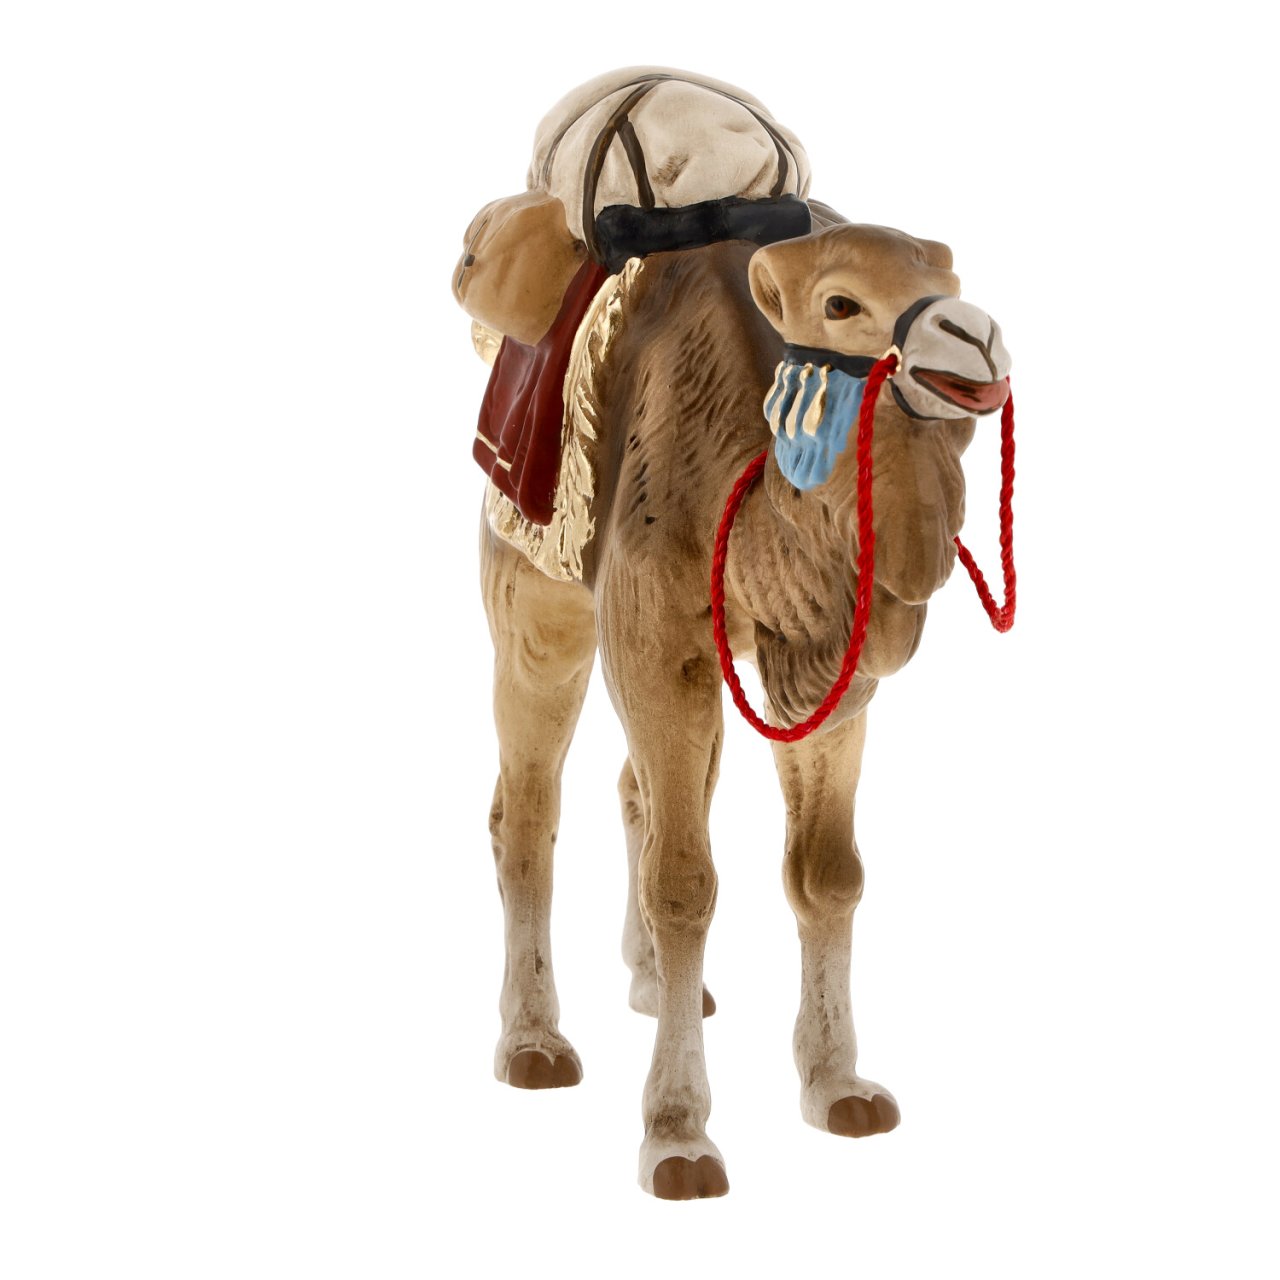 Camel with Luggage, 11-12cm scale by Marolin Manufaktur